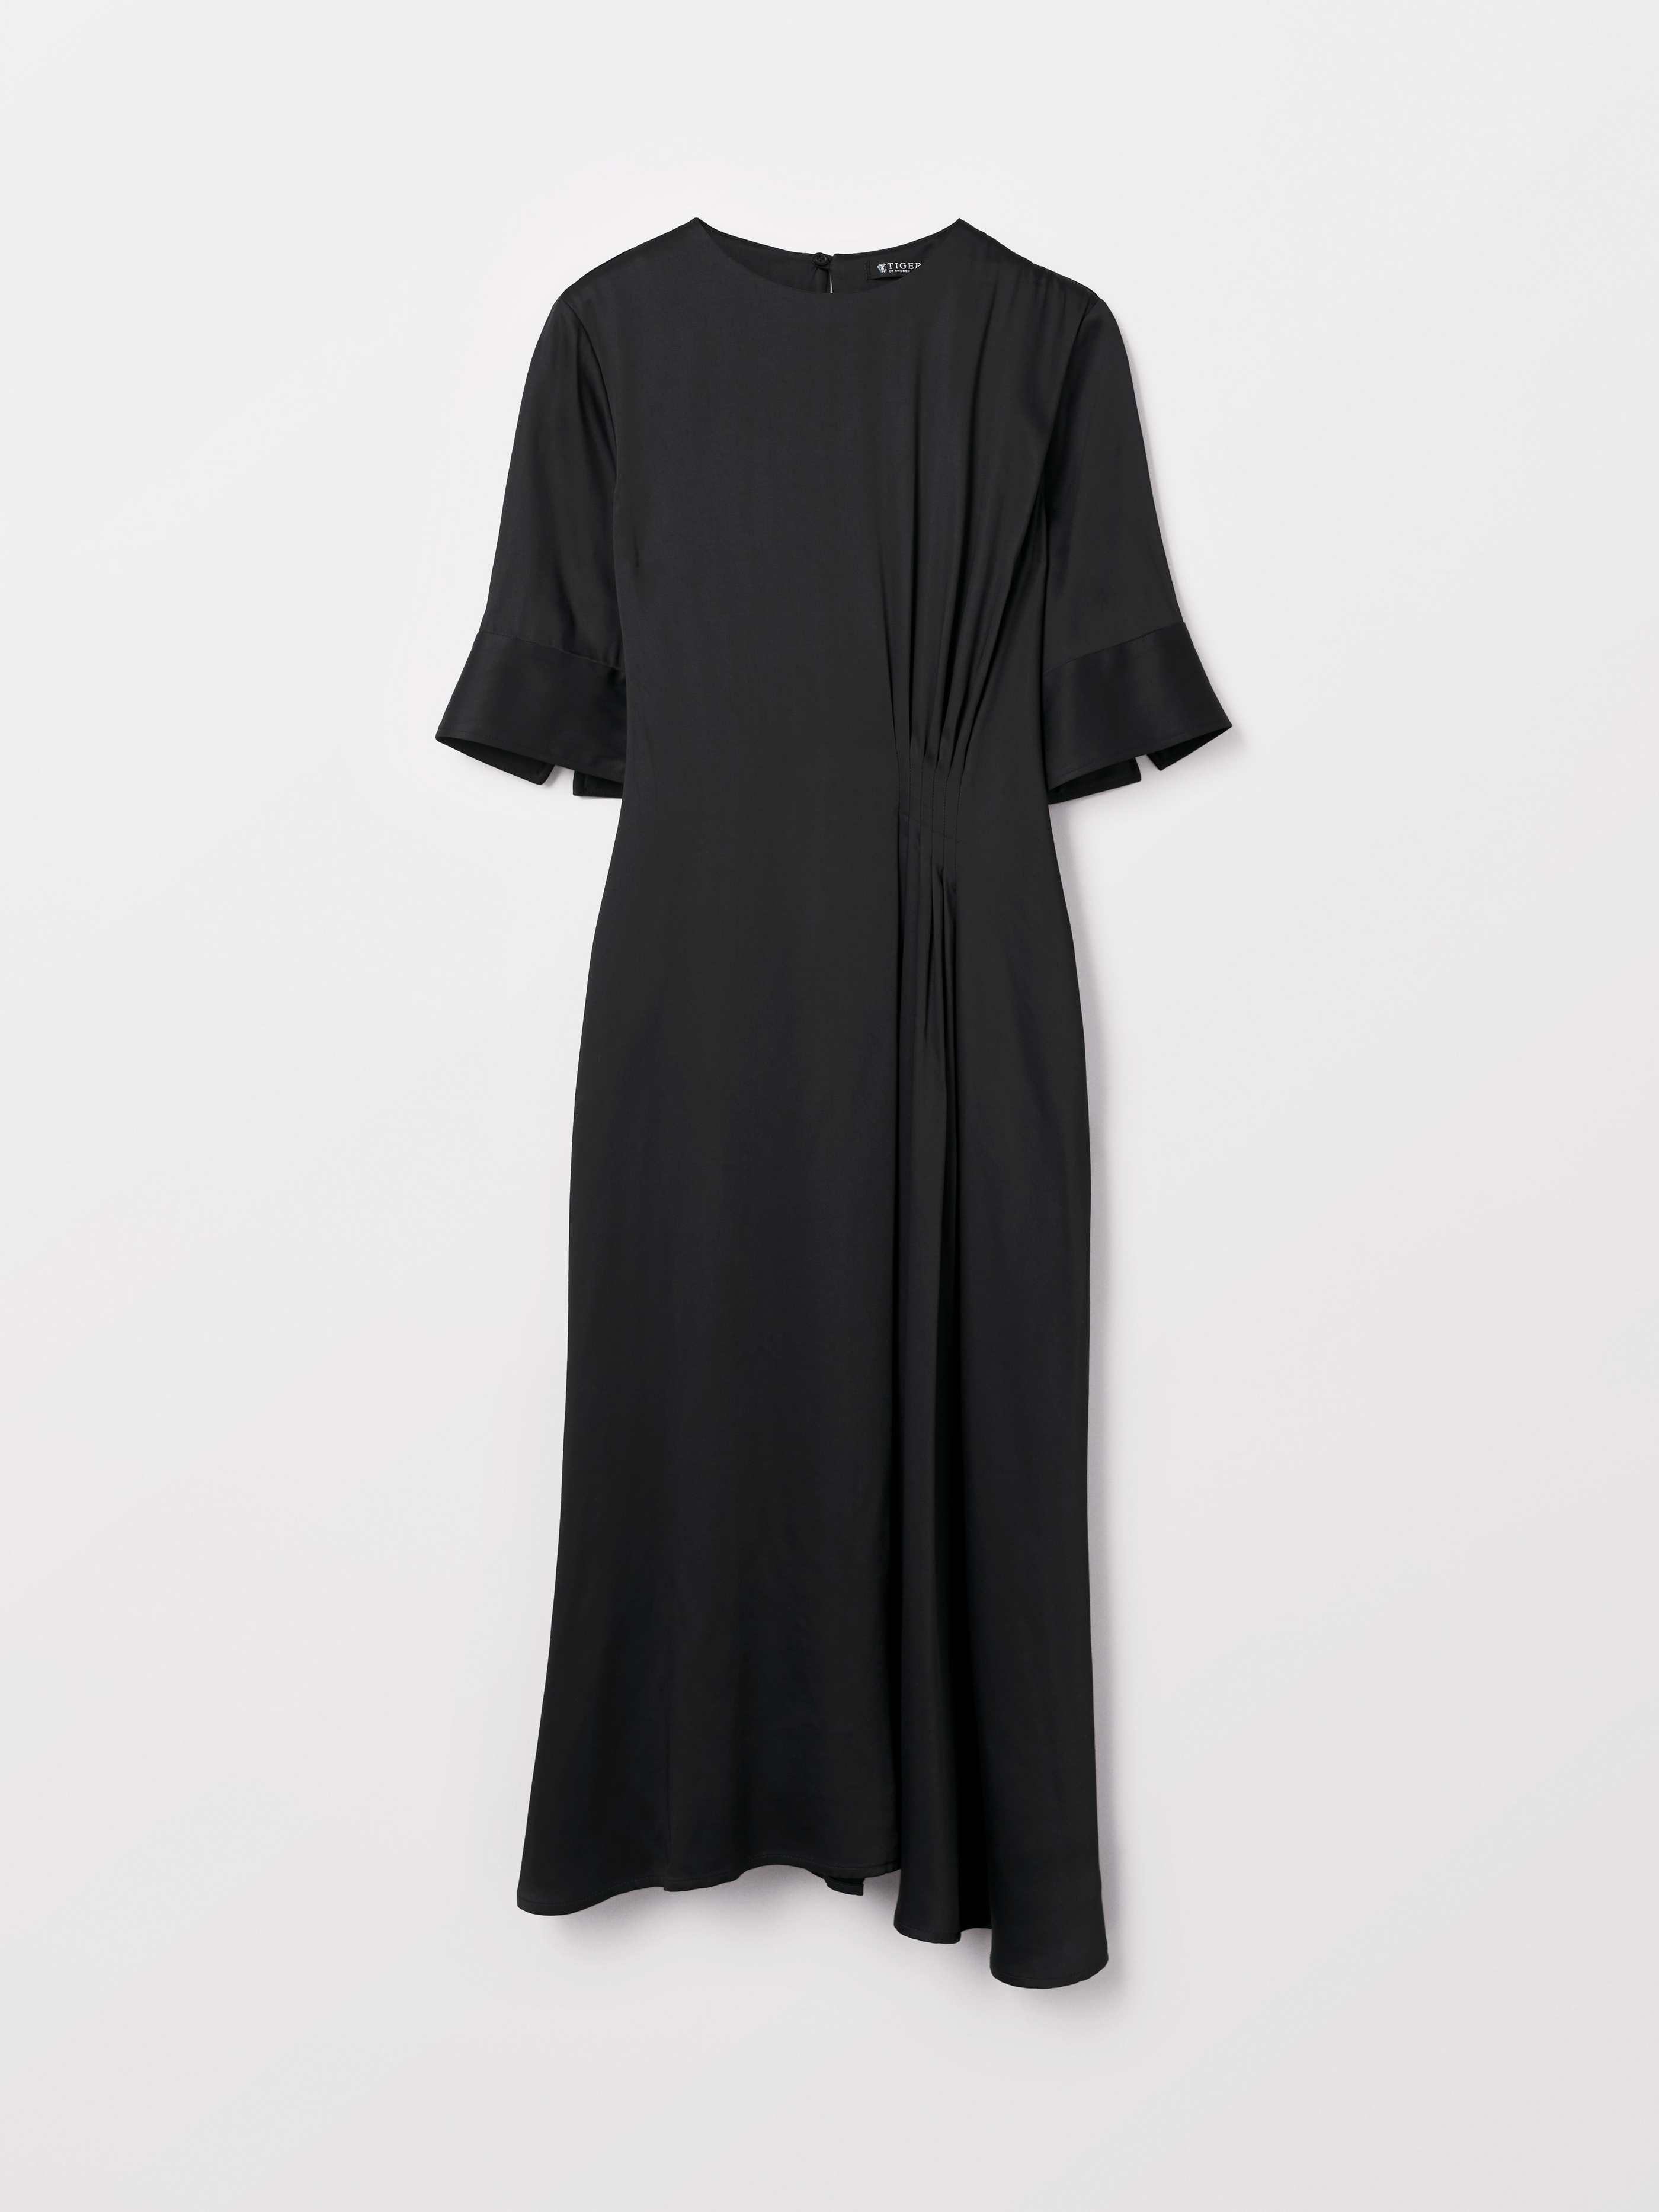 Anella Dress - Buy Dresses & Skirts online